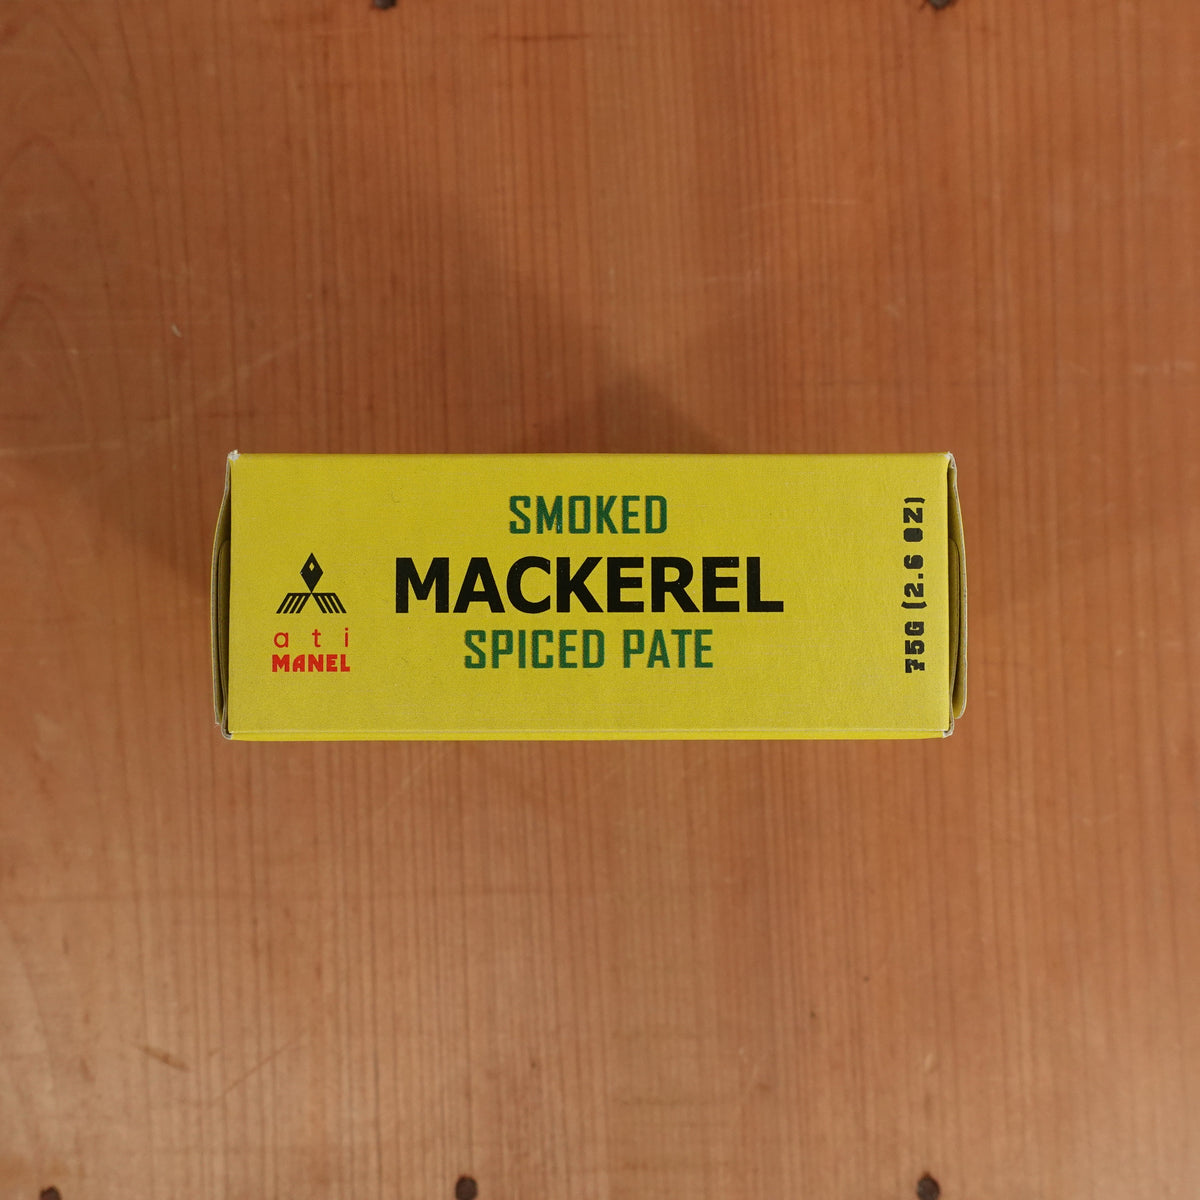 Ati Manel Spiced Smoked Mackerel Pate - 75g